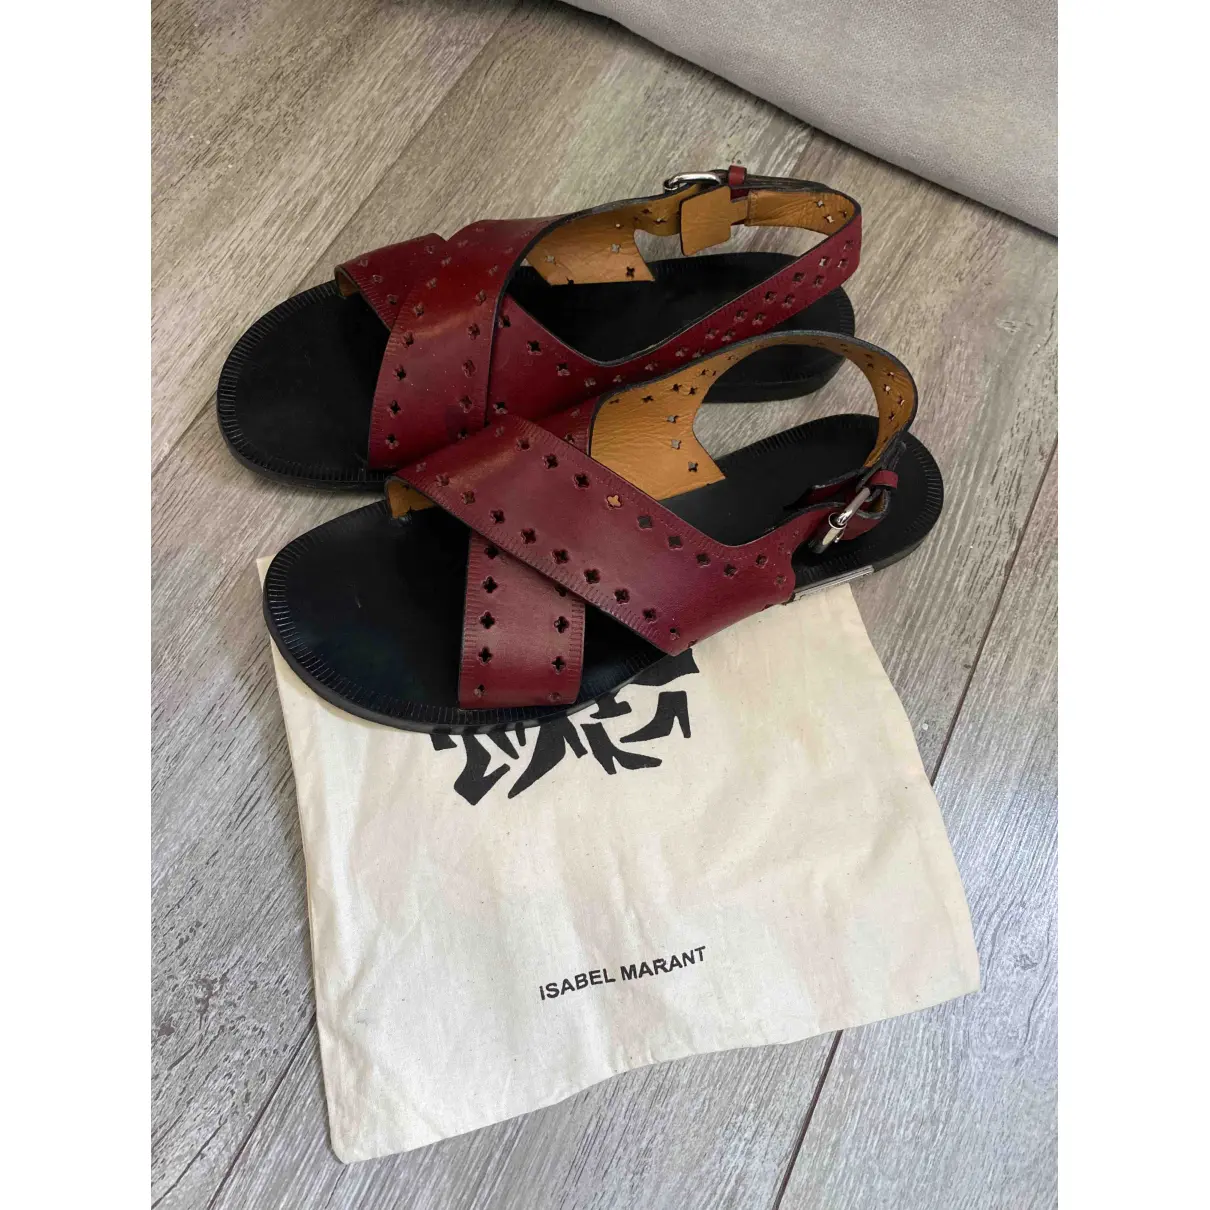 Buy Isabel Marant Etoile Leather sandals online